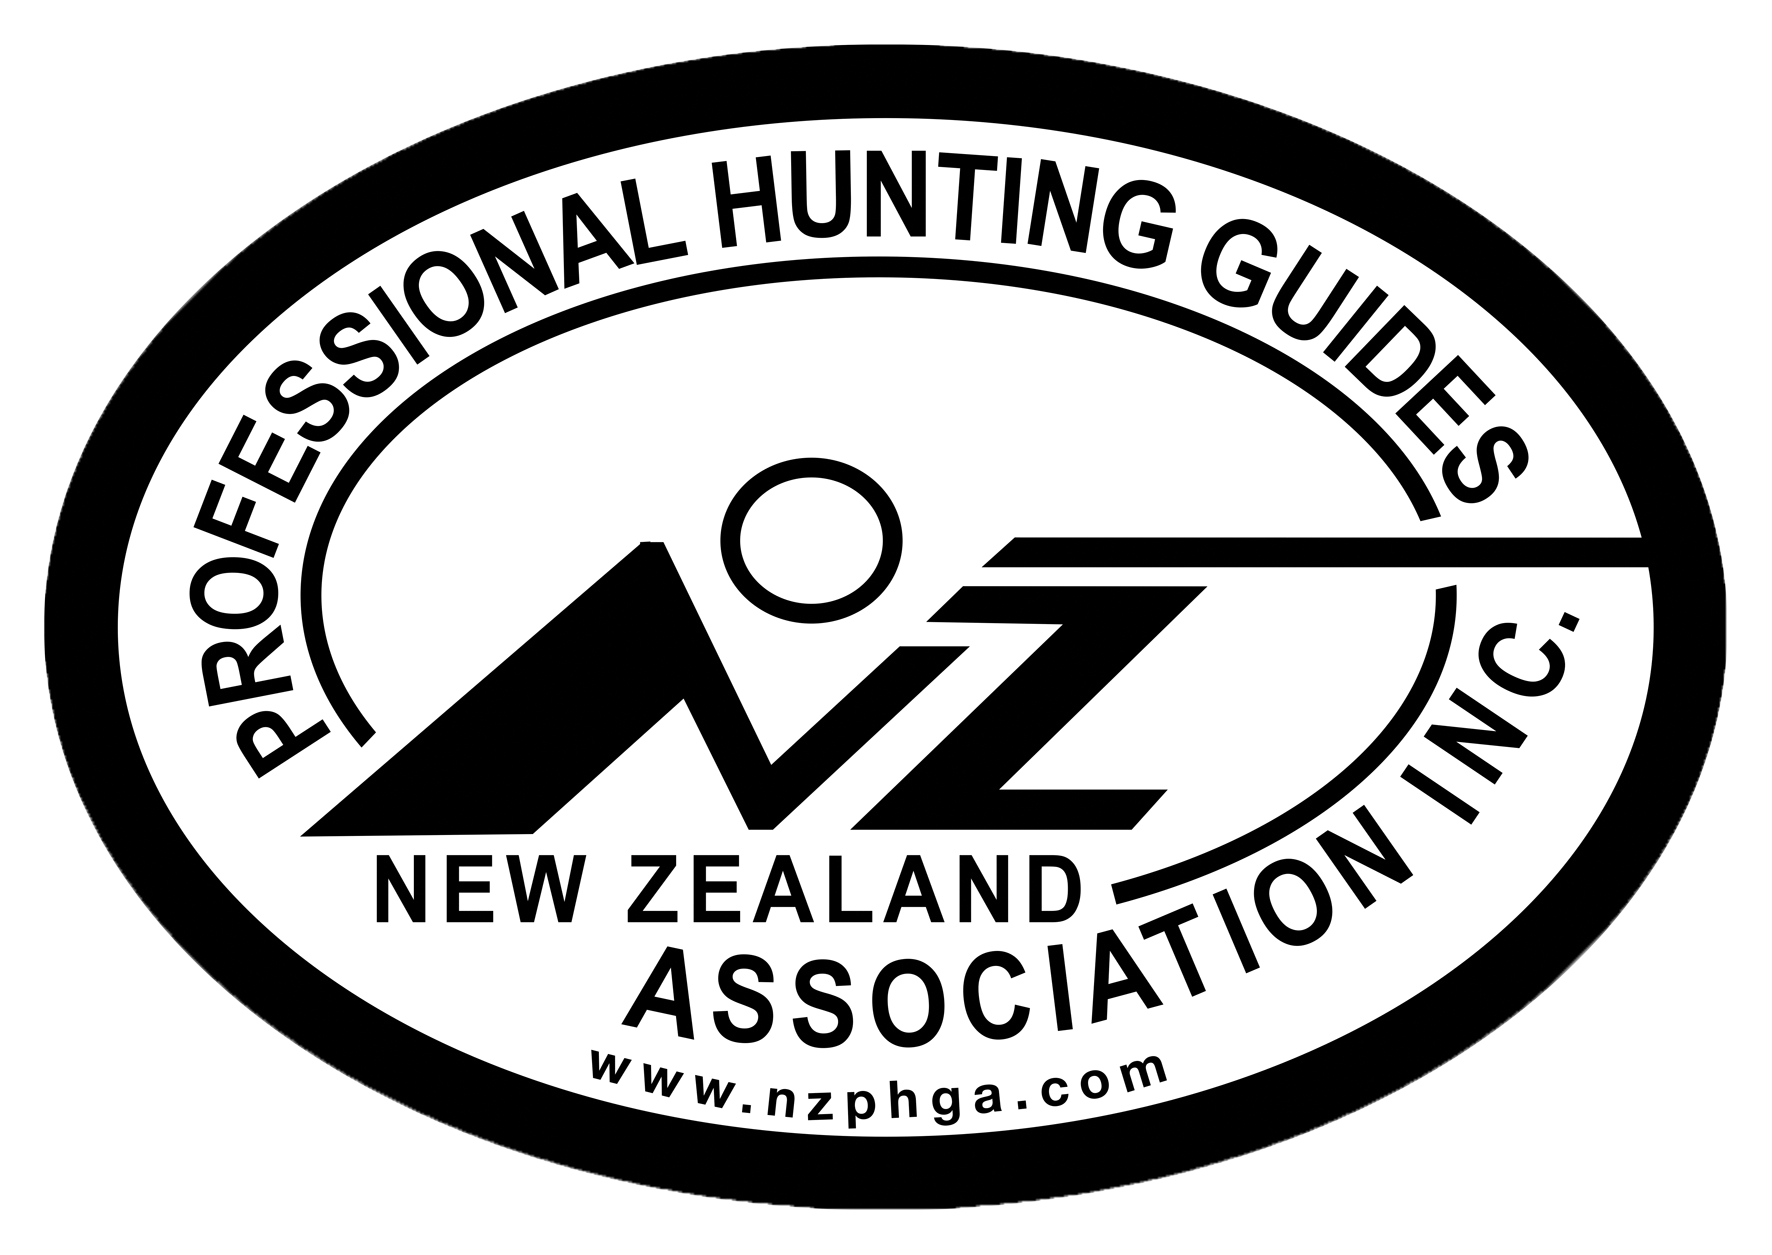 Proud members of the NZ Prof. Hunt Guide lgo